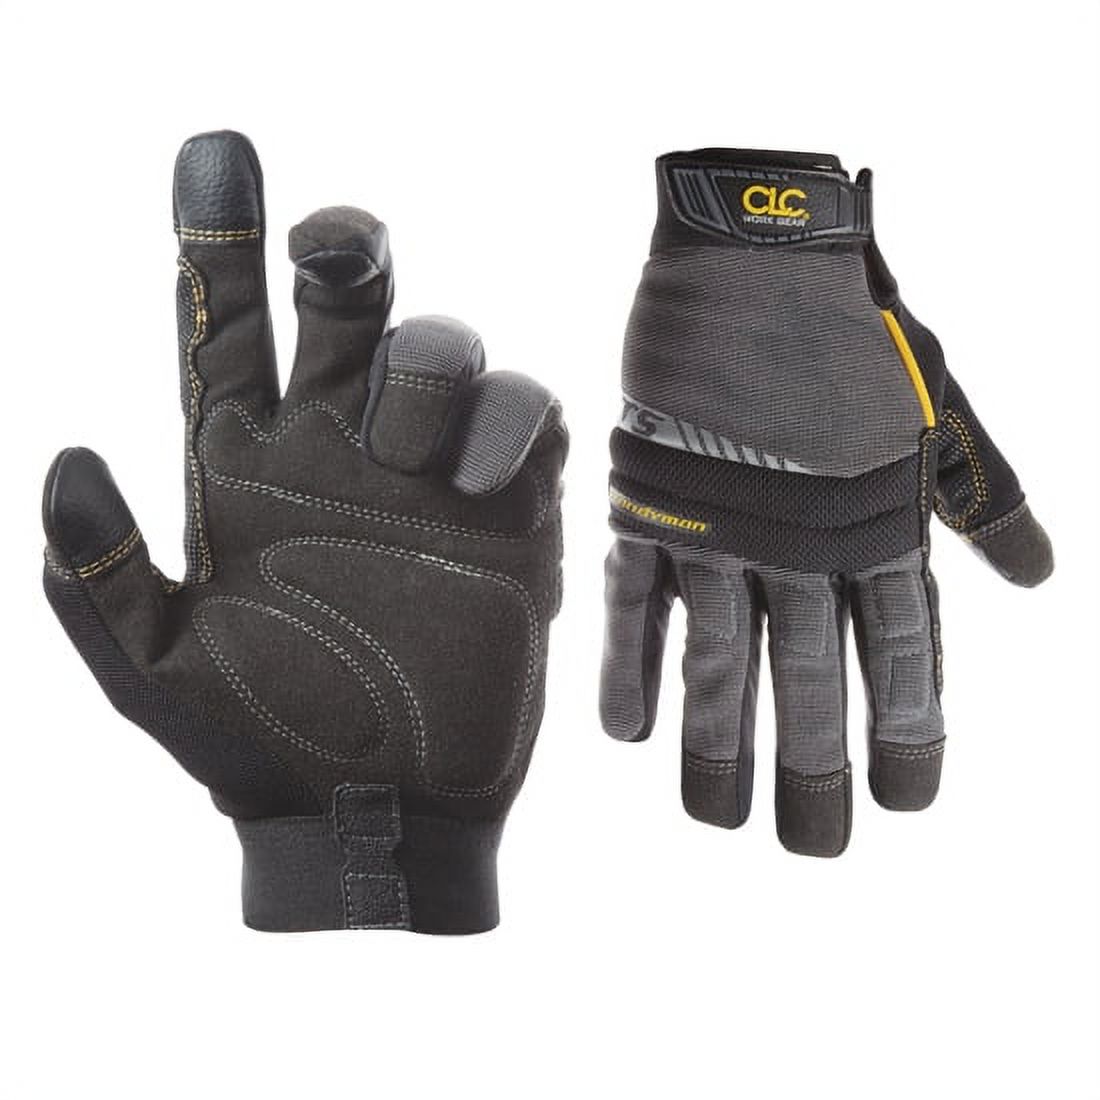 Custom Leathercraft Work Gloves, Black and Gray Large Handyman Gloves - image 1 of 2